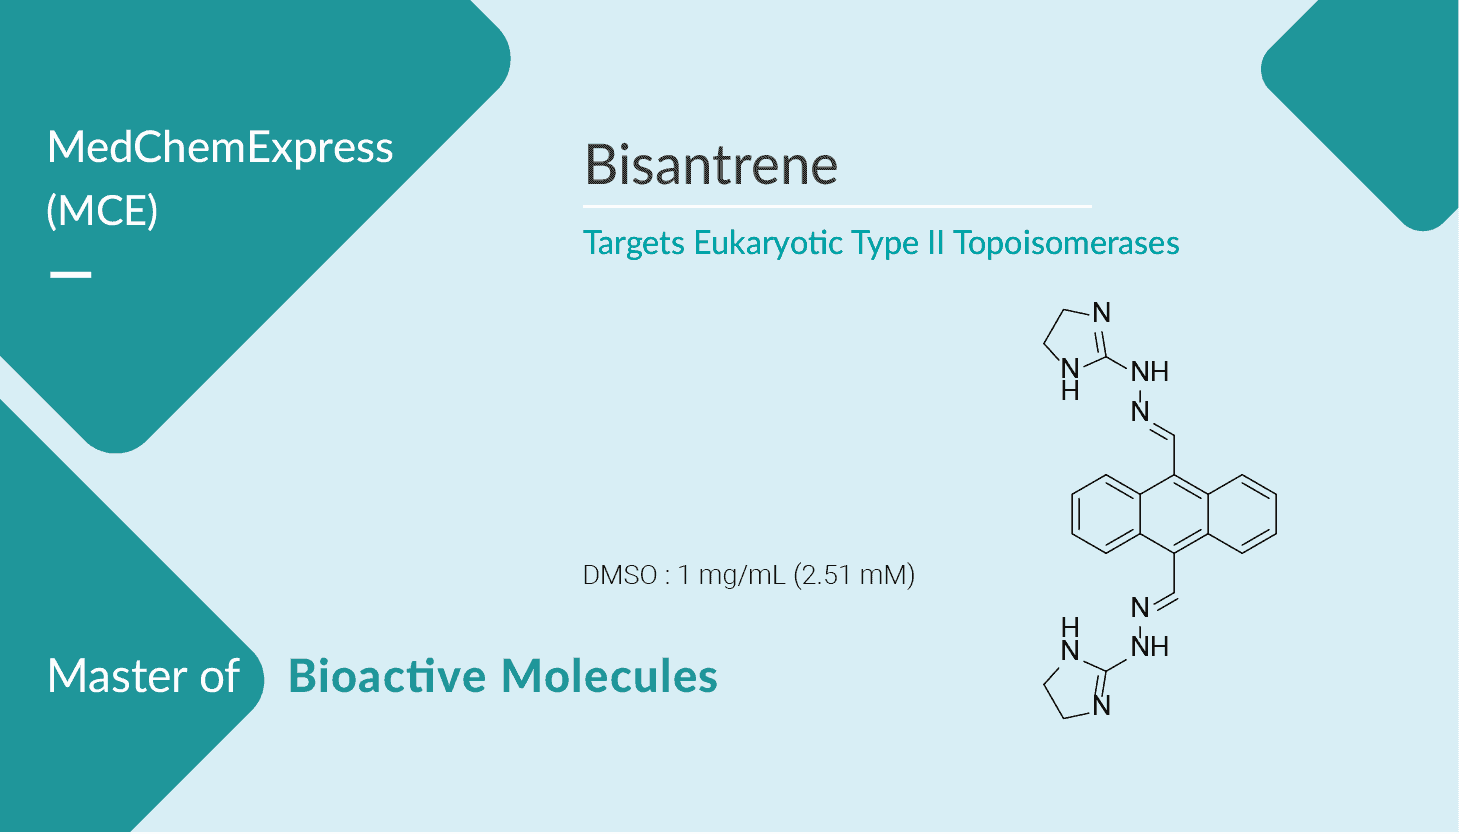 Bisantrene, an Antitumor Drug, Targets Eukaryotic Type II Topoisomerases